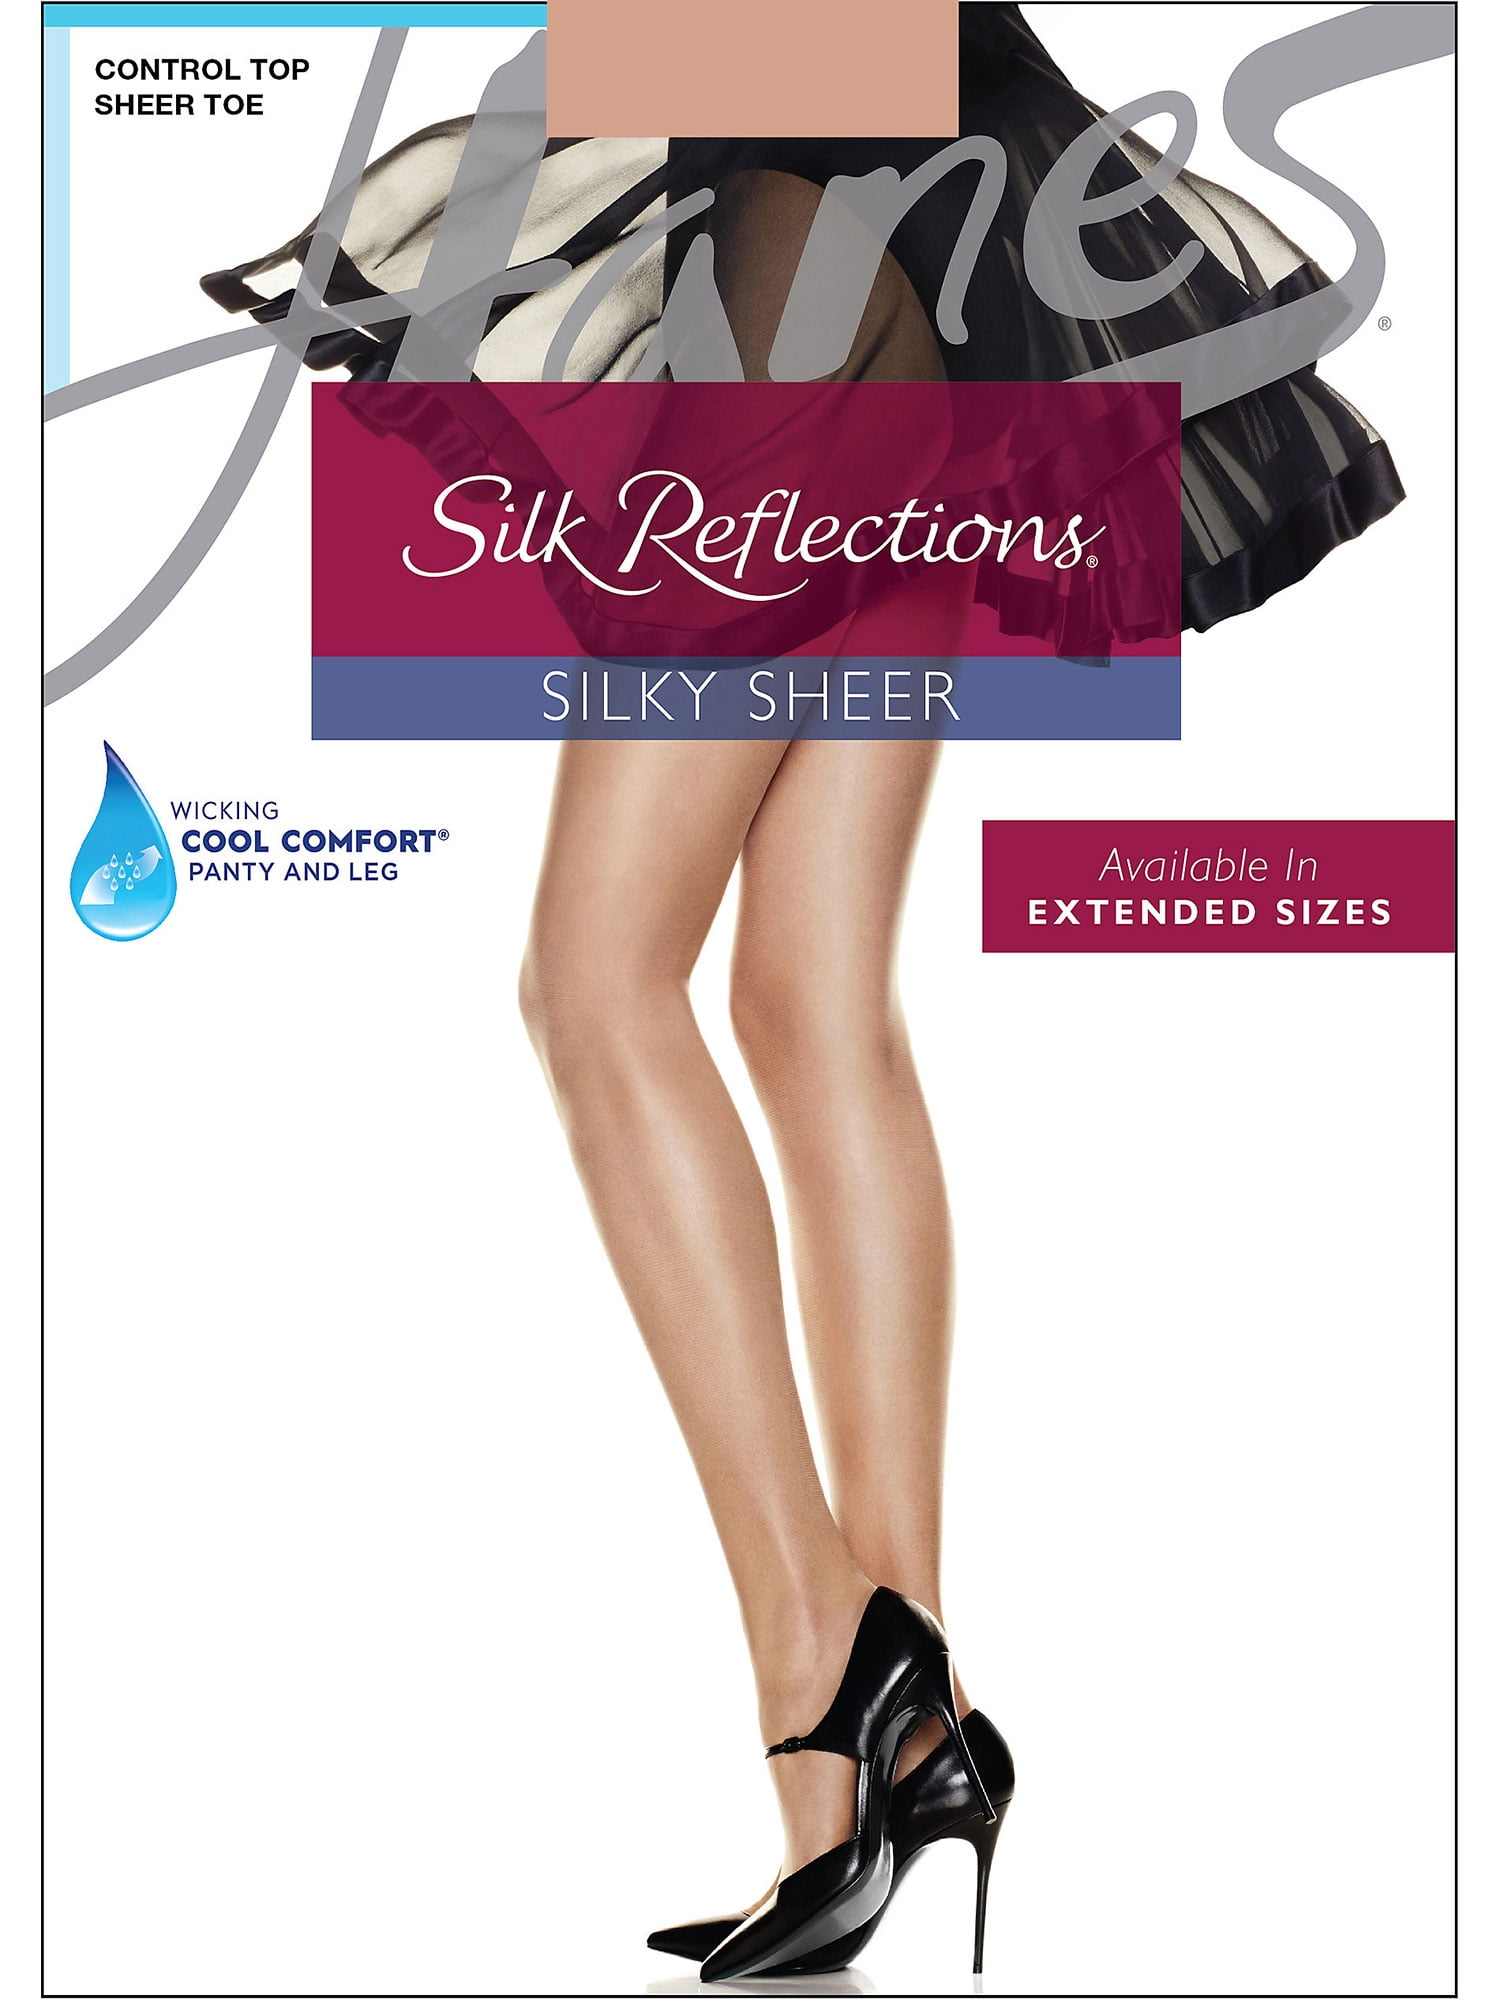 Silk Reflections Sheer Run Resist Control Top  Pantyhose, Confident wear,  Orange high heels